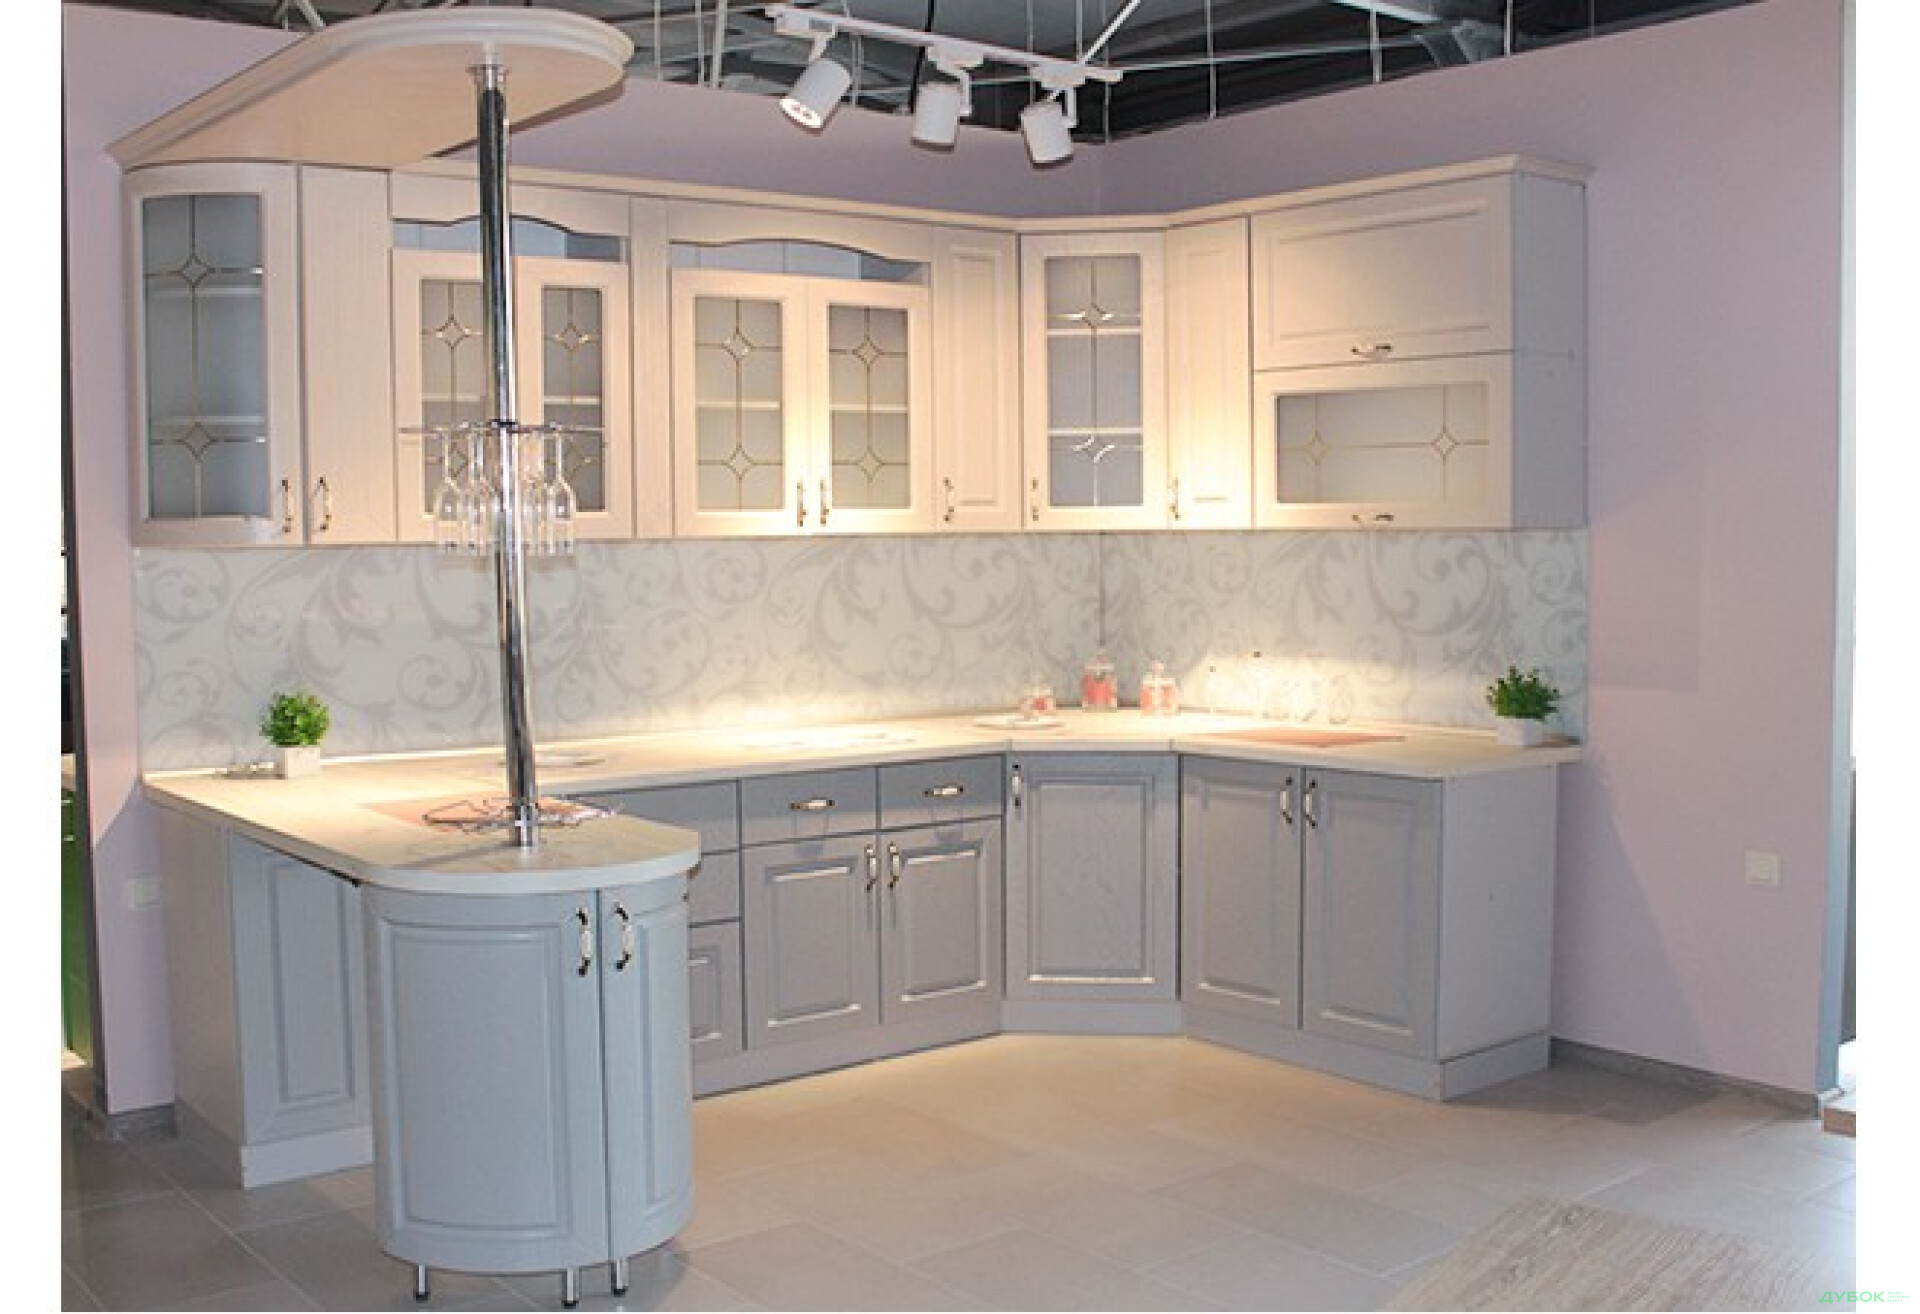 Фото 3 - Кухня Престиж / Prestige Угловая кухня І 2.9х1.7 Выставочная модель Мебель Стар